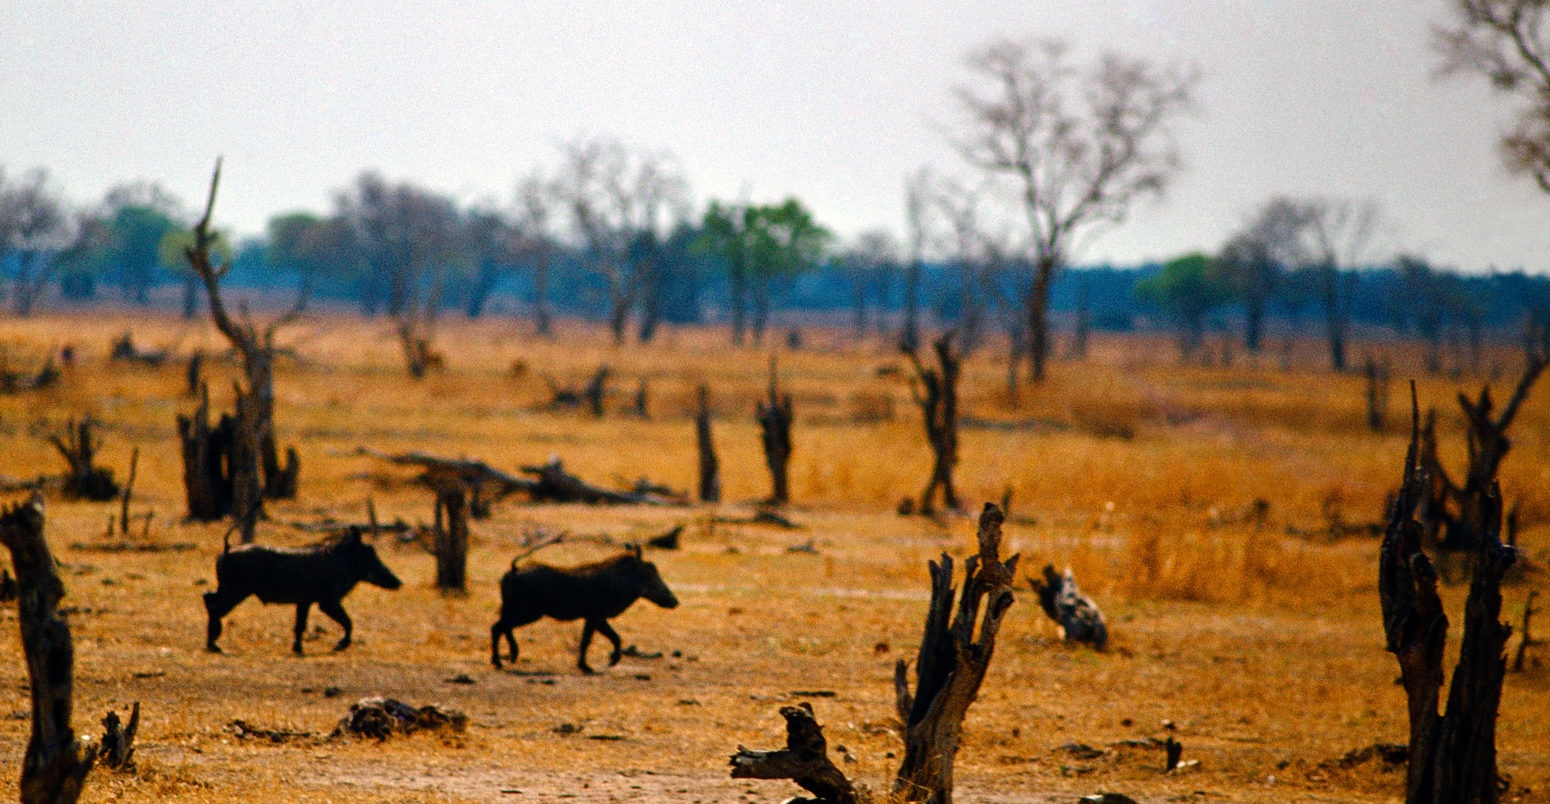 Drought In Hilapgwa Valley, Zambia. Credit: Art Directors & TRIP / Alamy Stock Photo